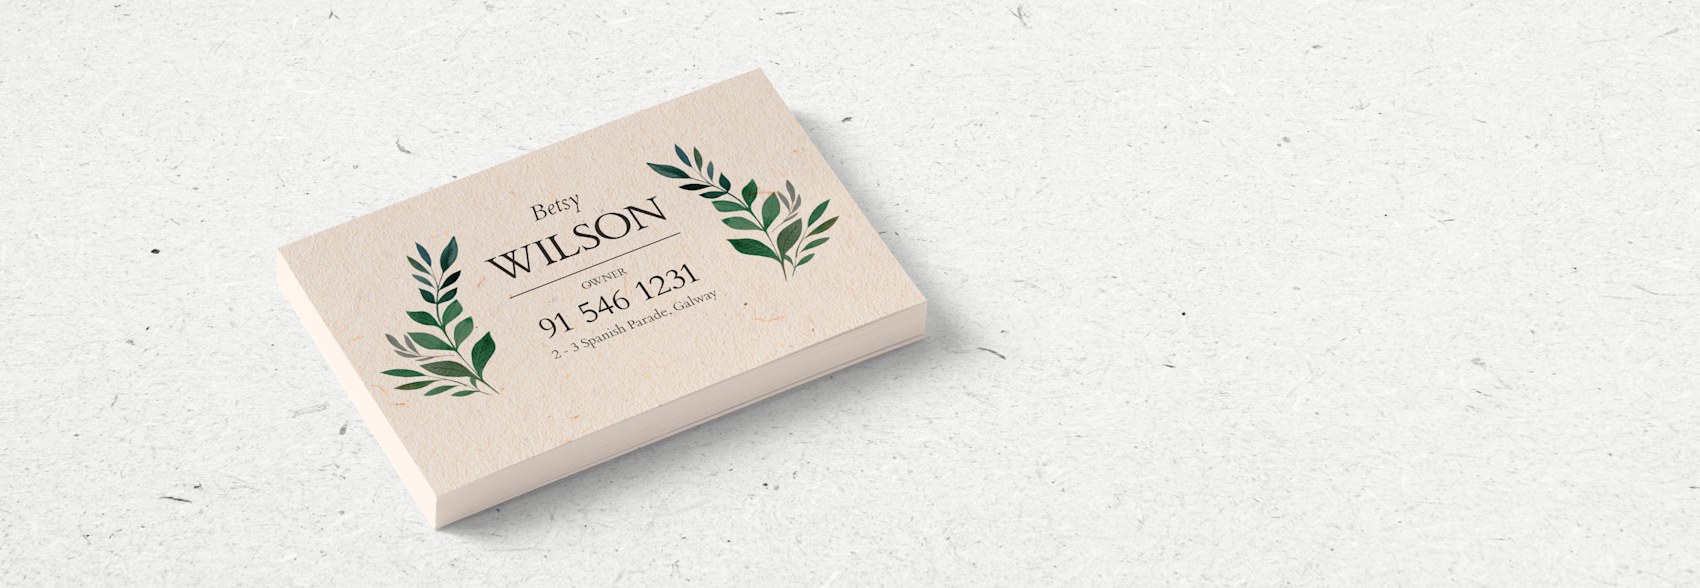 Cotton paper business cards